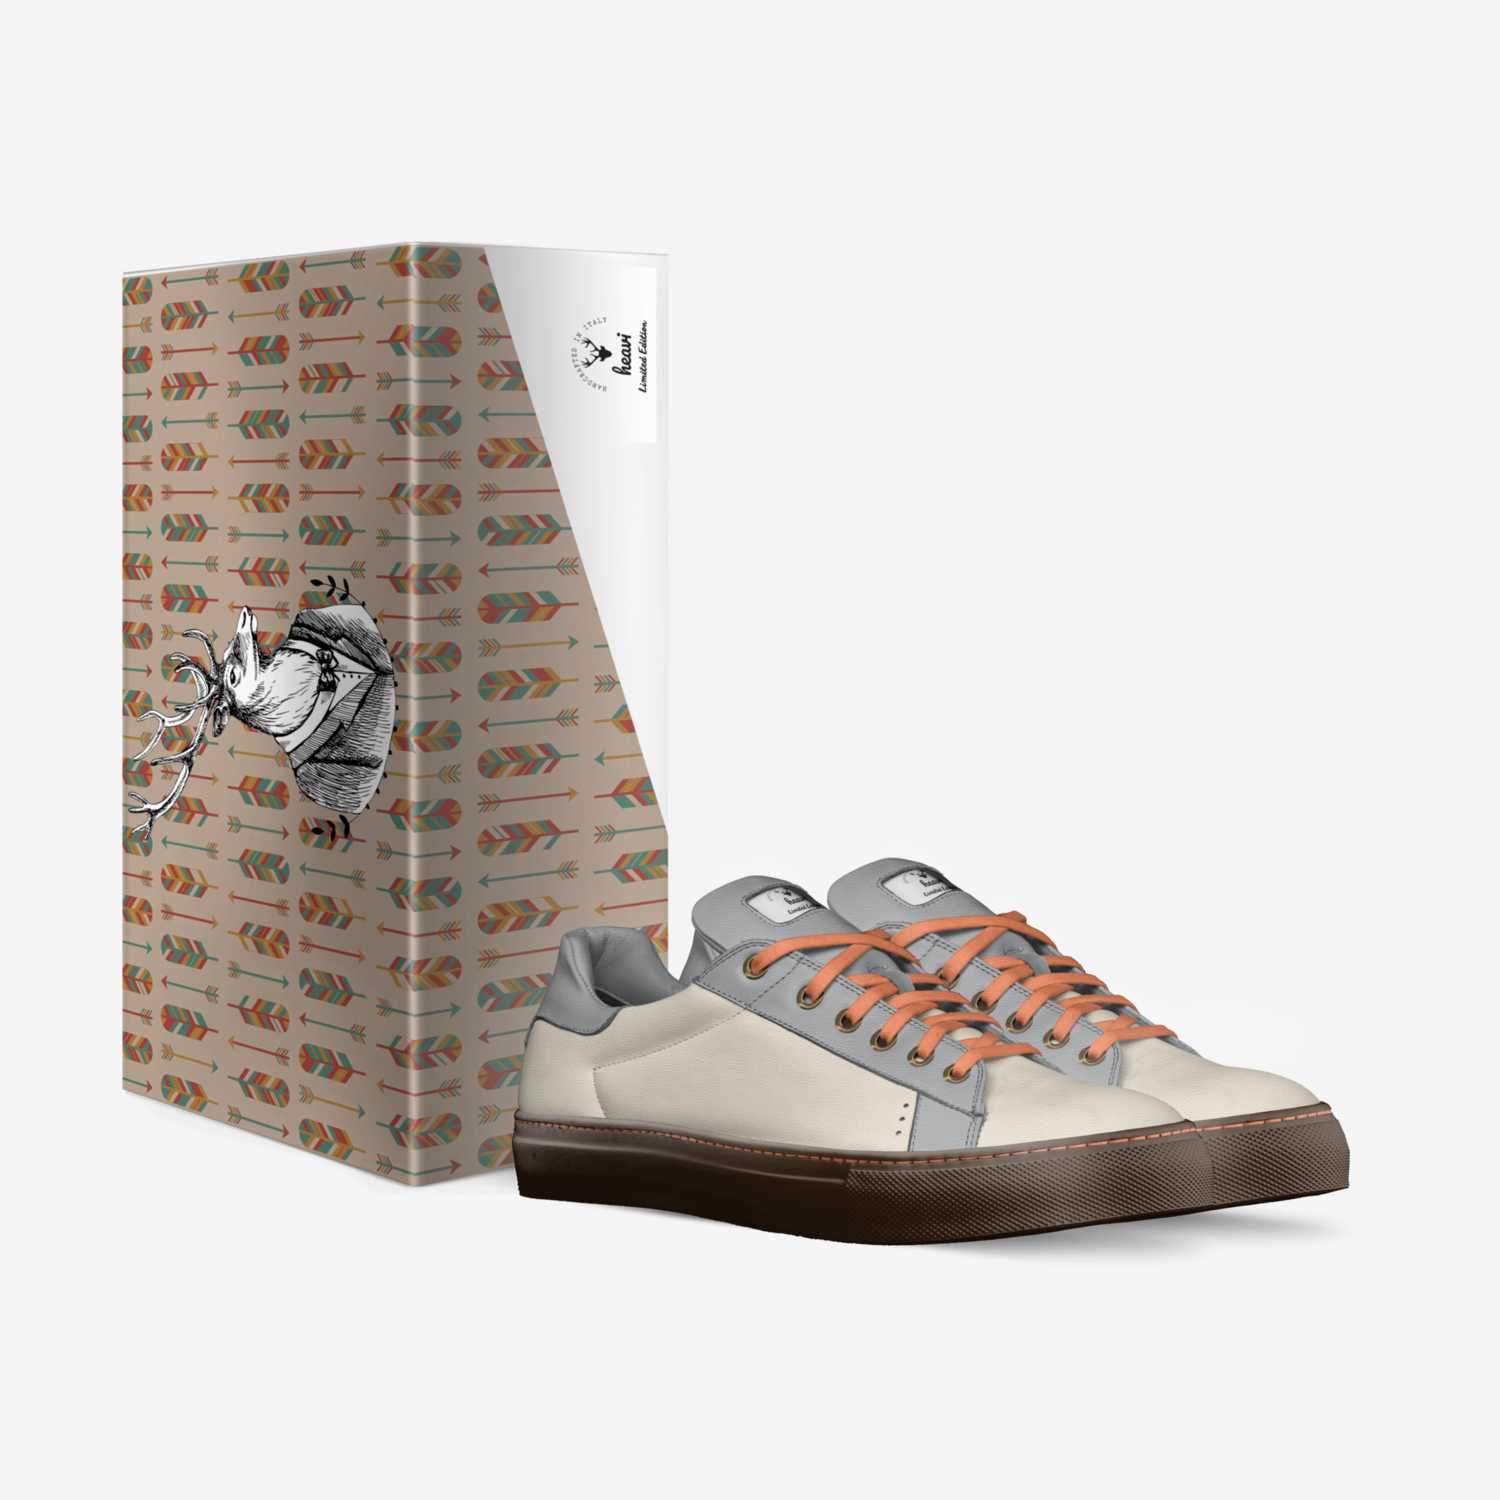 heavi custom made in Italy shoes by Kanah Israel | Box view